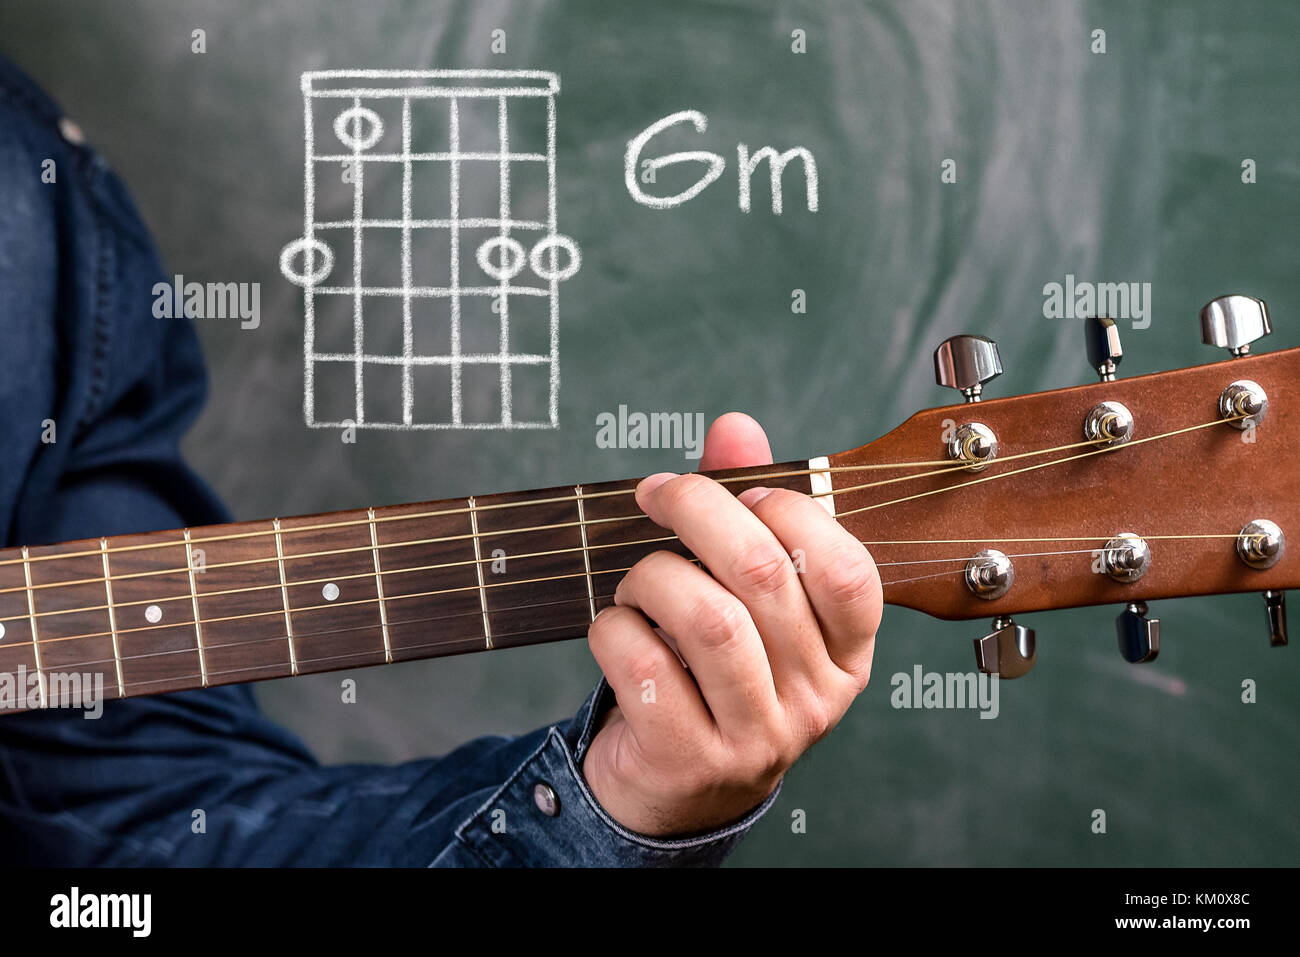 Man in a blue denim shirt playing guitar chords displayed on a blackboard,  Chord Gm Stock Photo - Alamy